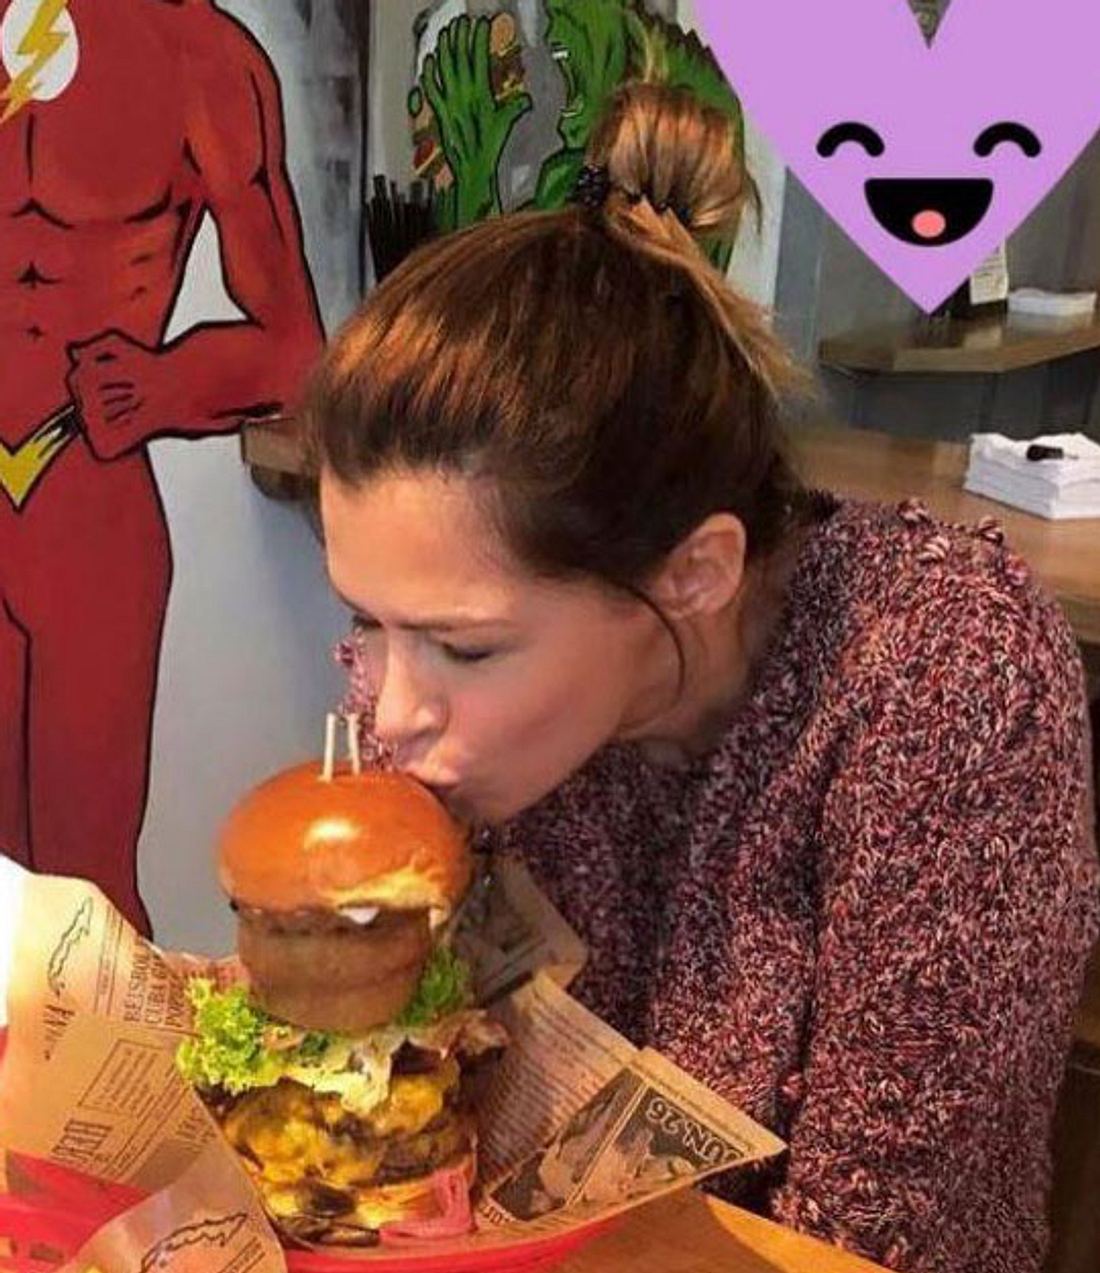 Sabia Boulahrouz küsst Hamburger